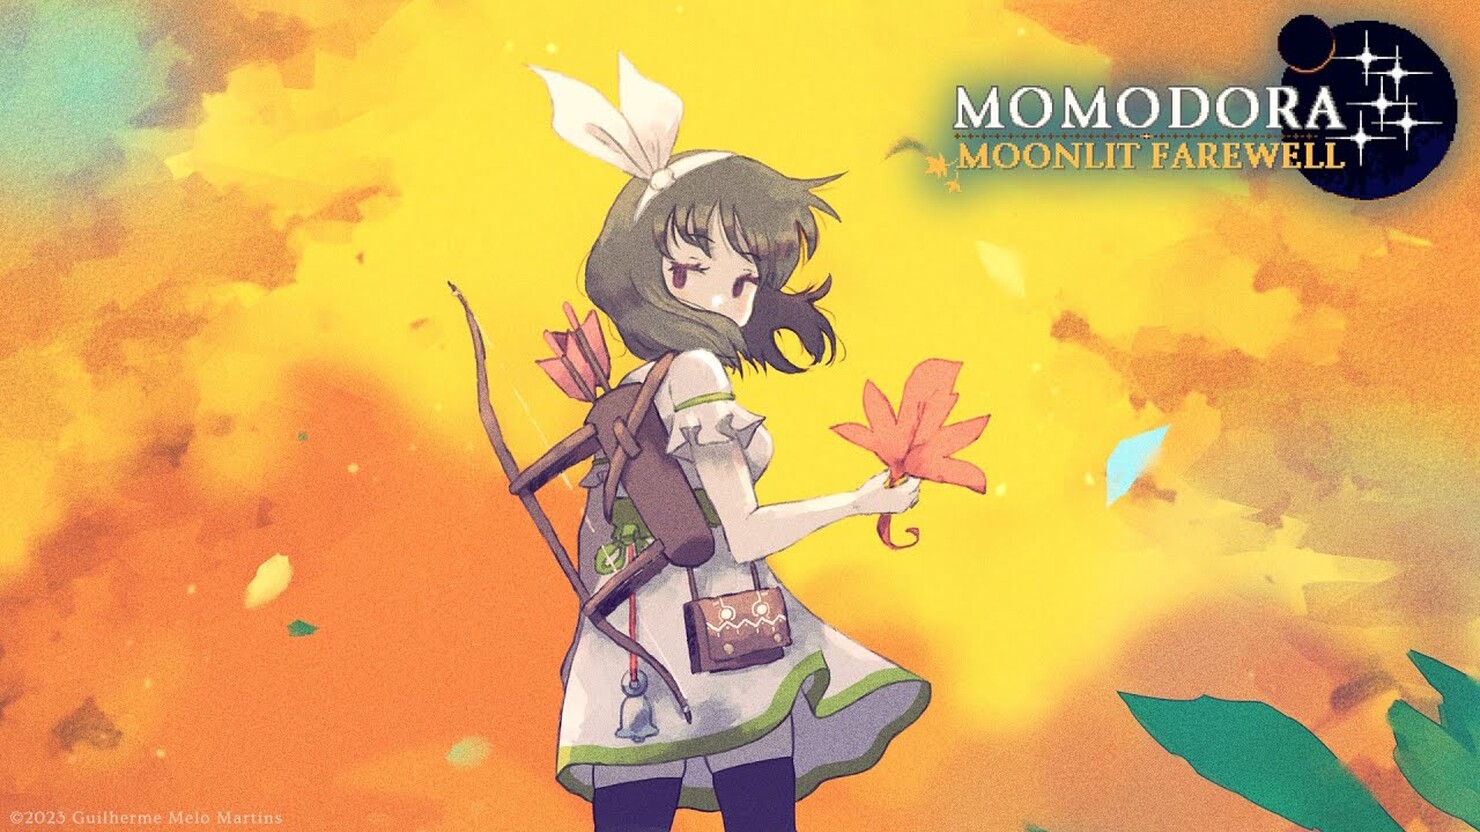 Momodora: Moonlit Farewell #12 (Бог луны Селин ФИНАЛ)